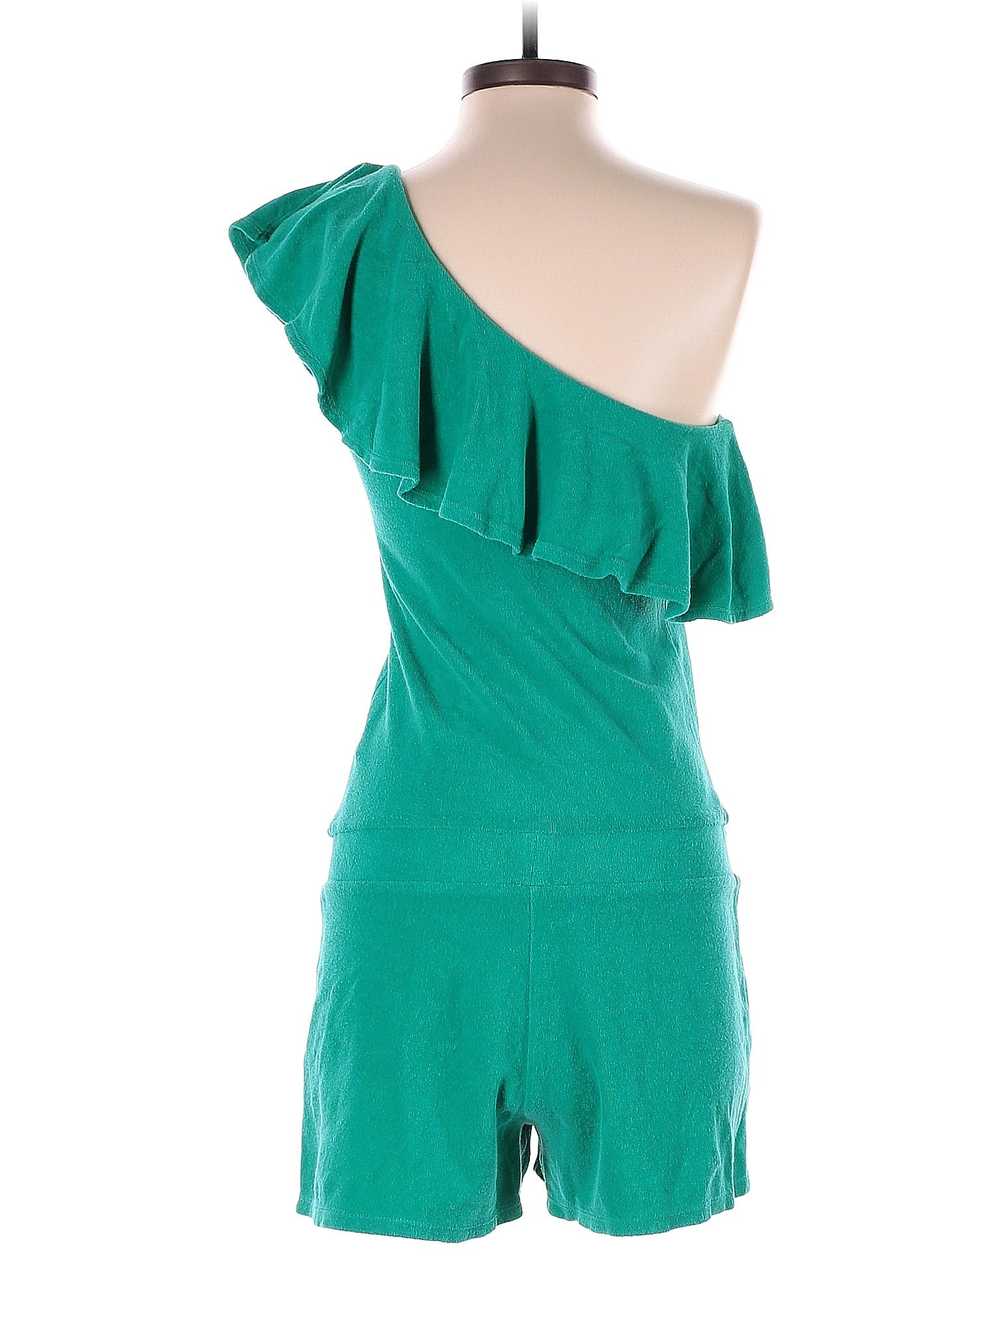 Juicy Couture Women Green Romper S - image 2